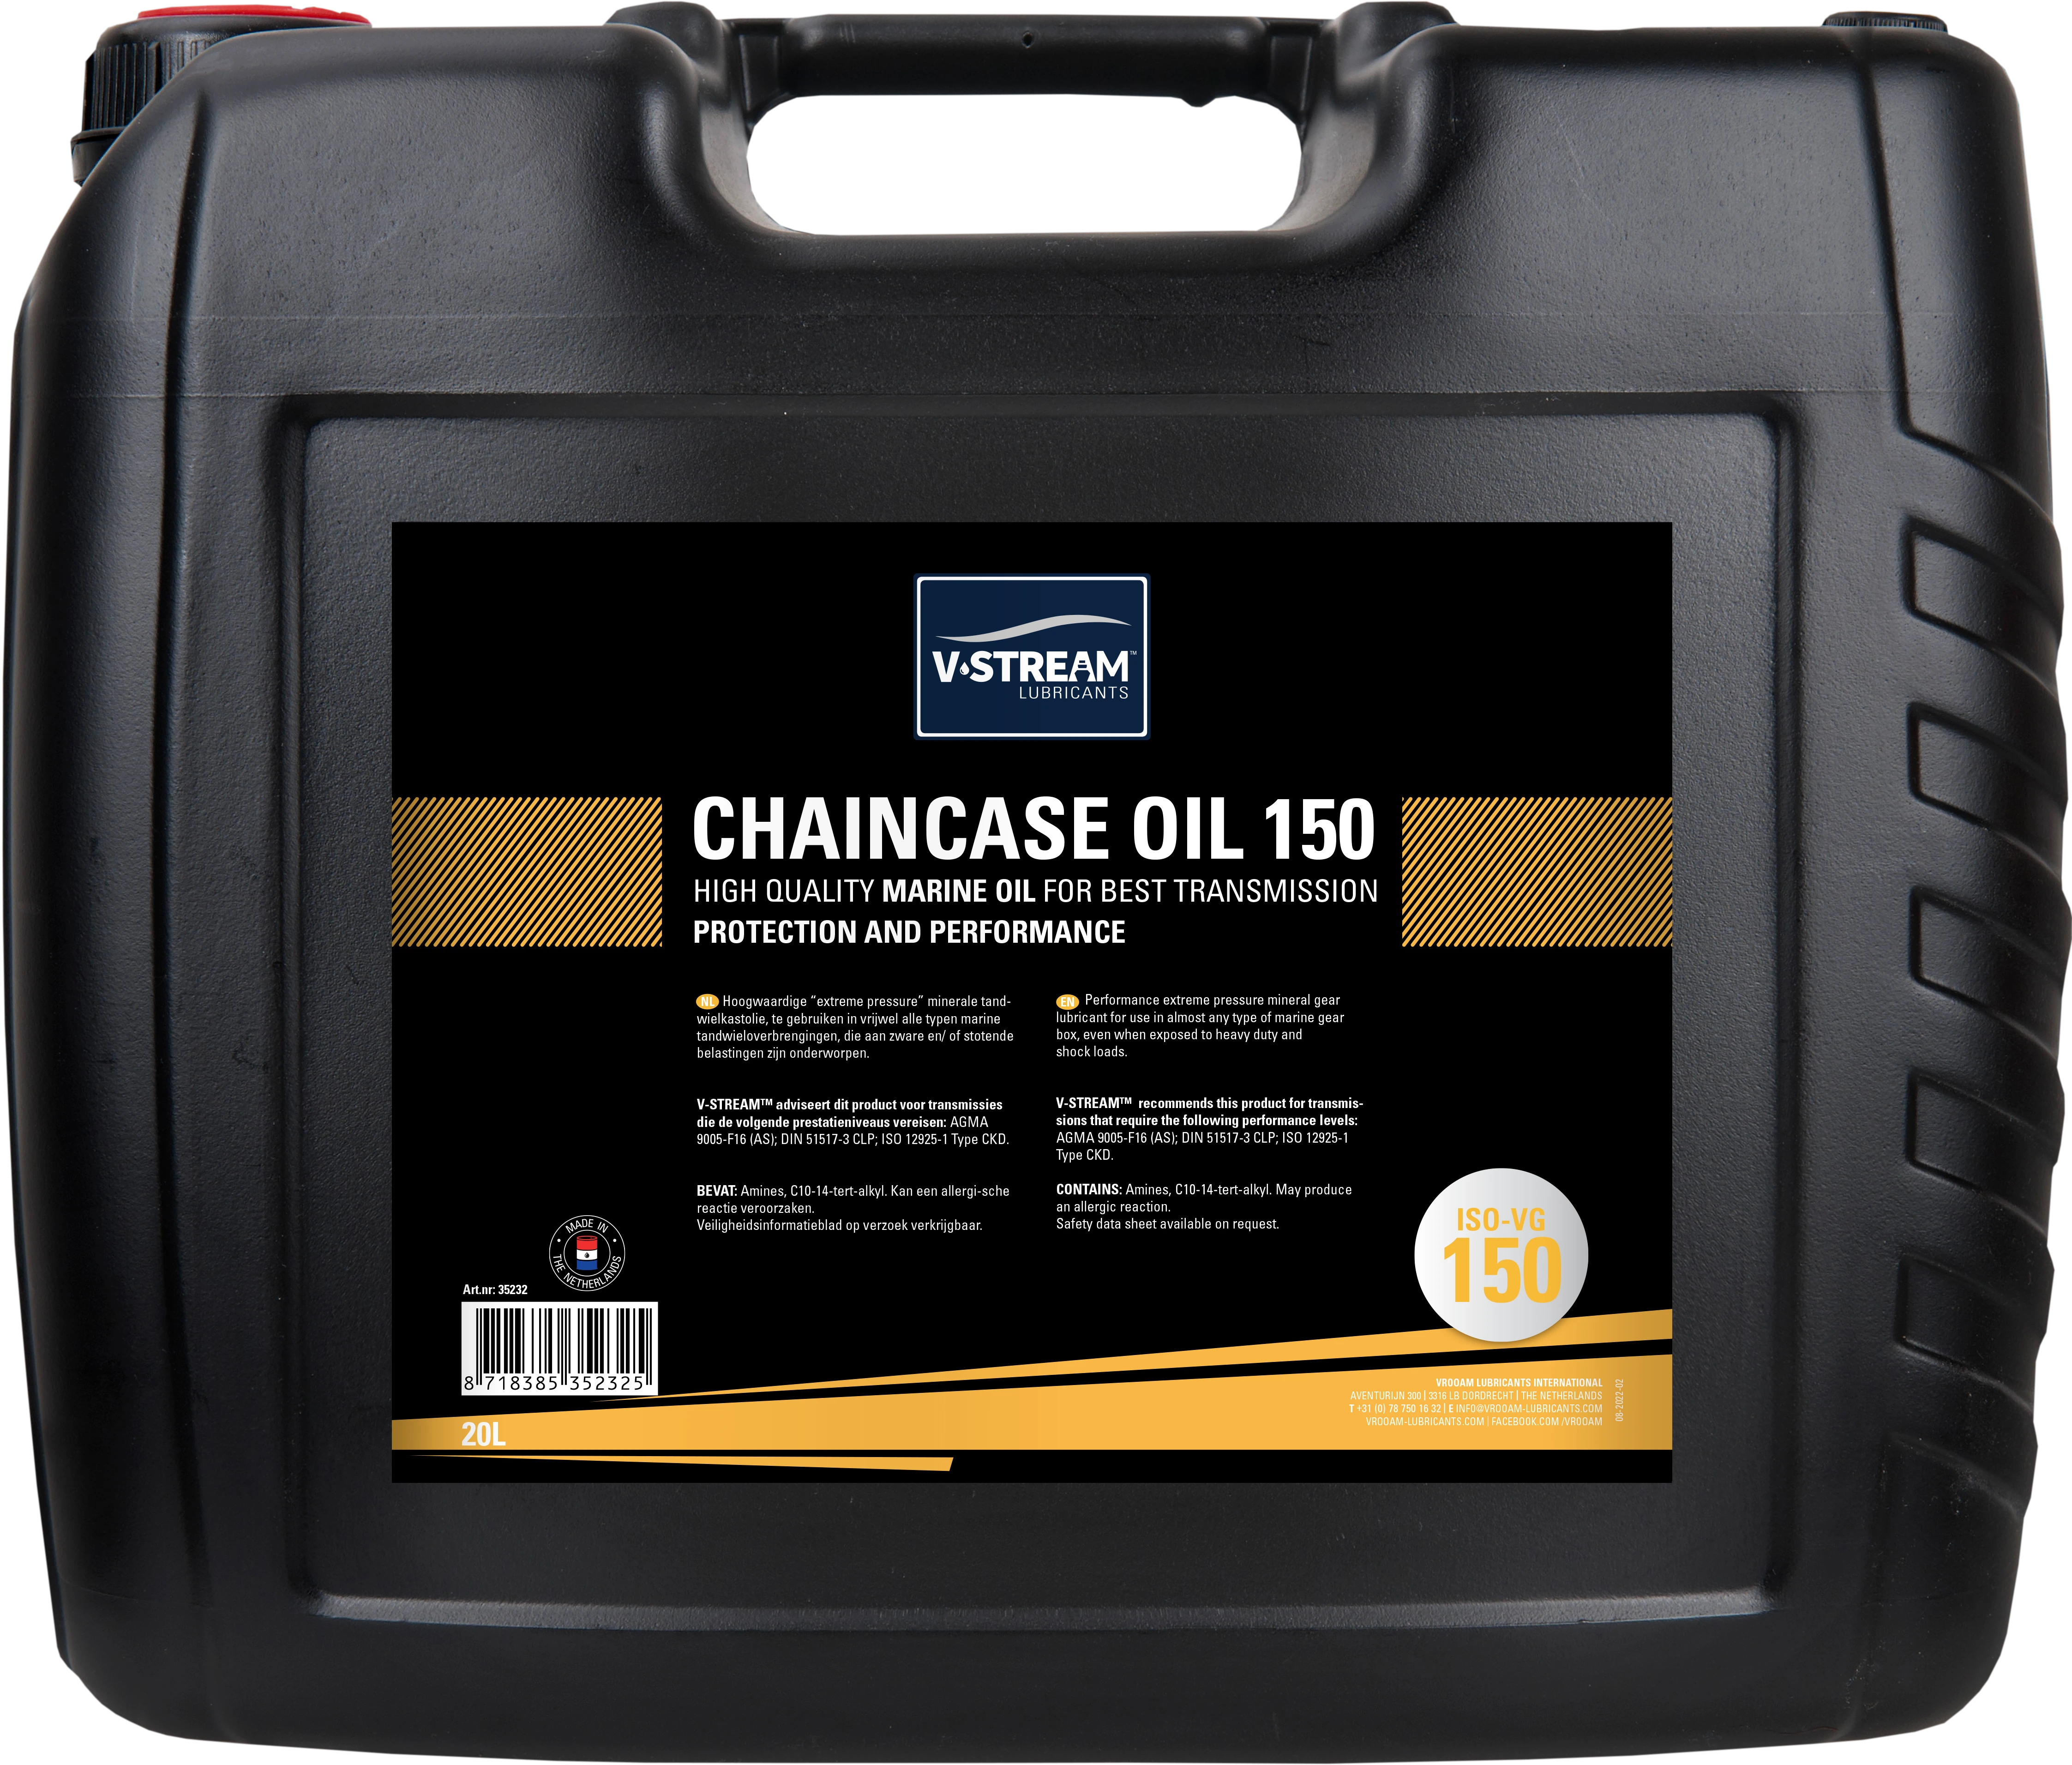 V-STREAM Chaincase Oil 150 20 Liter